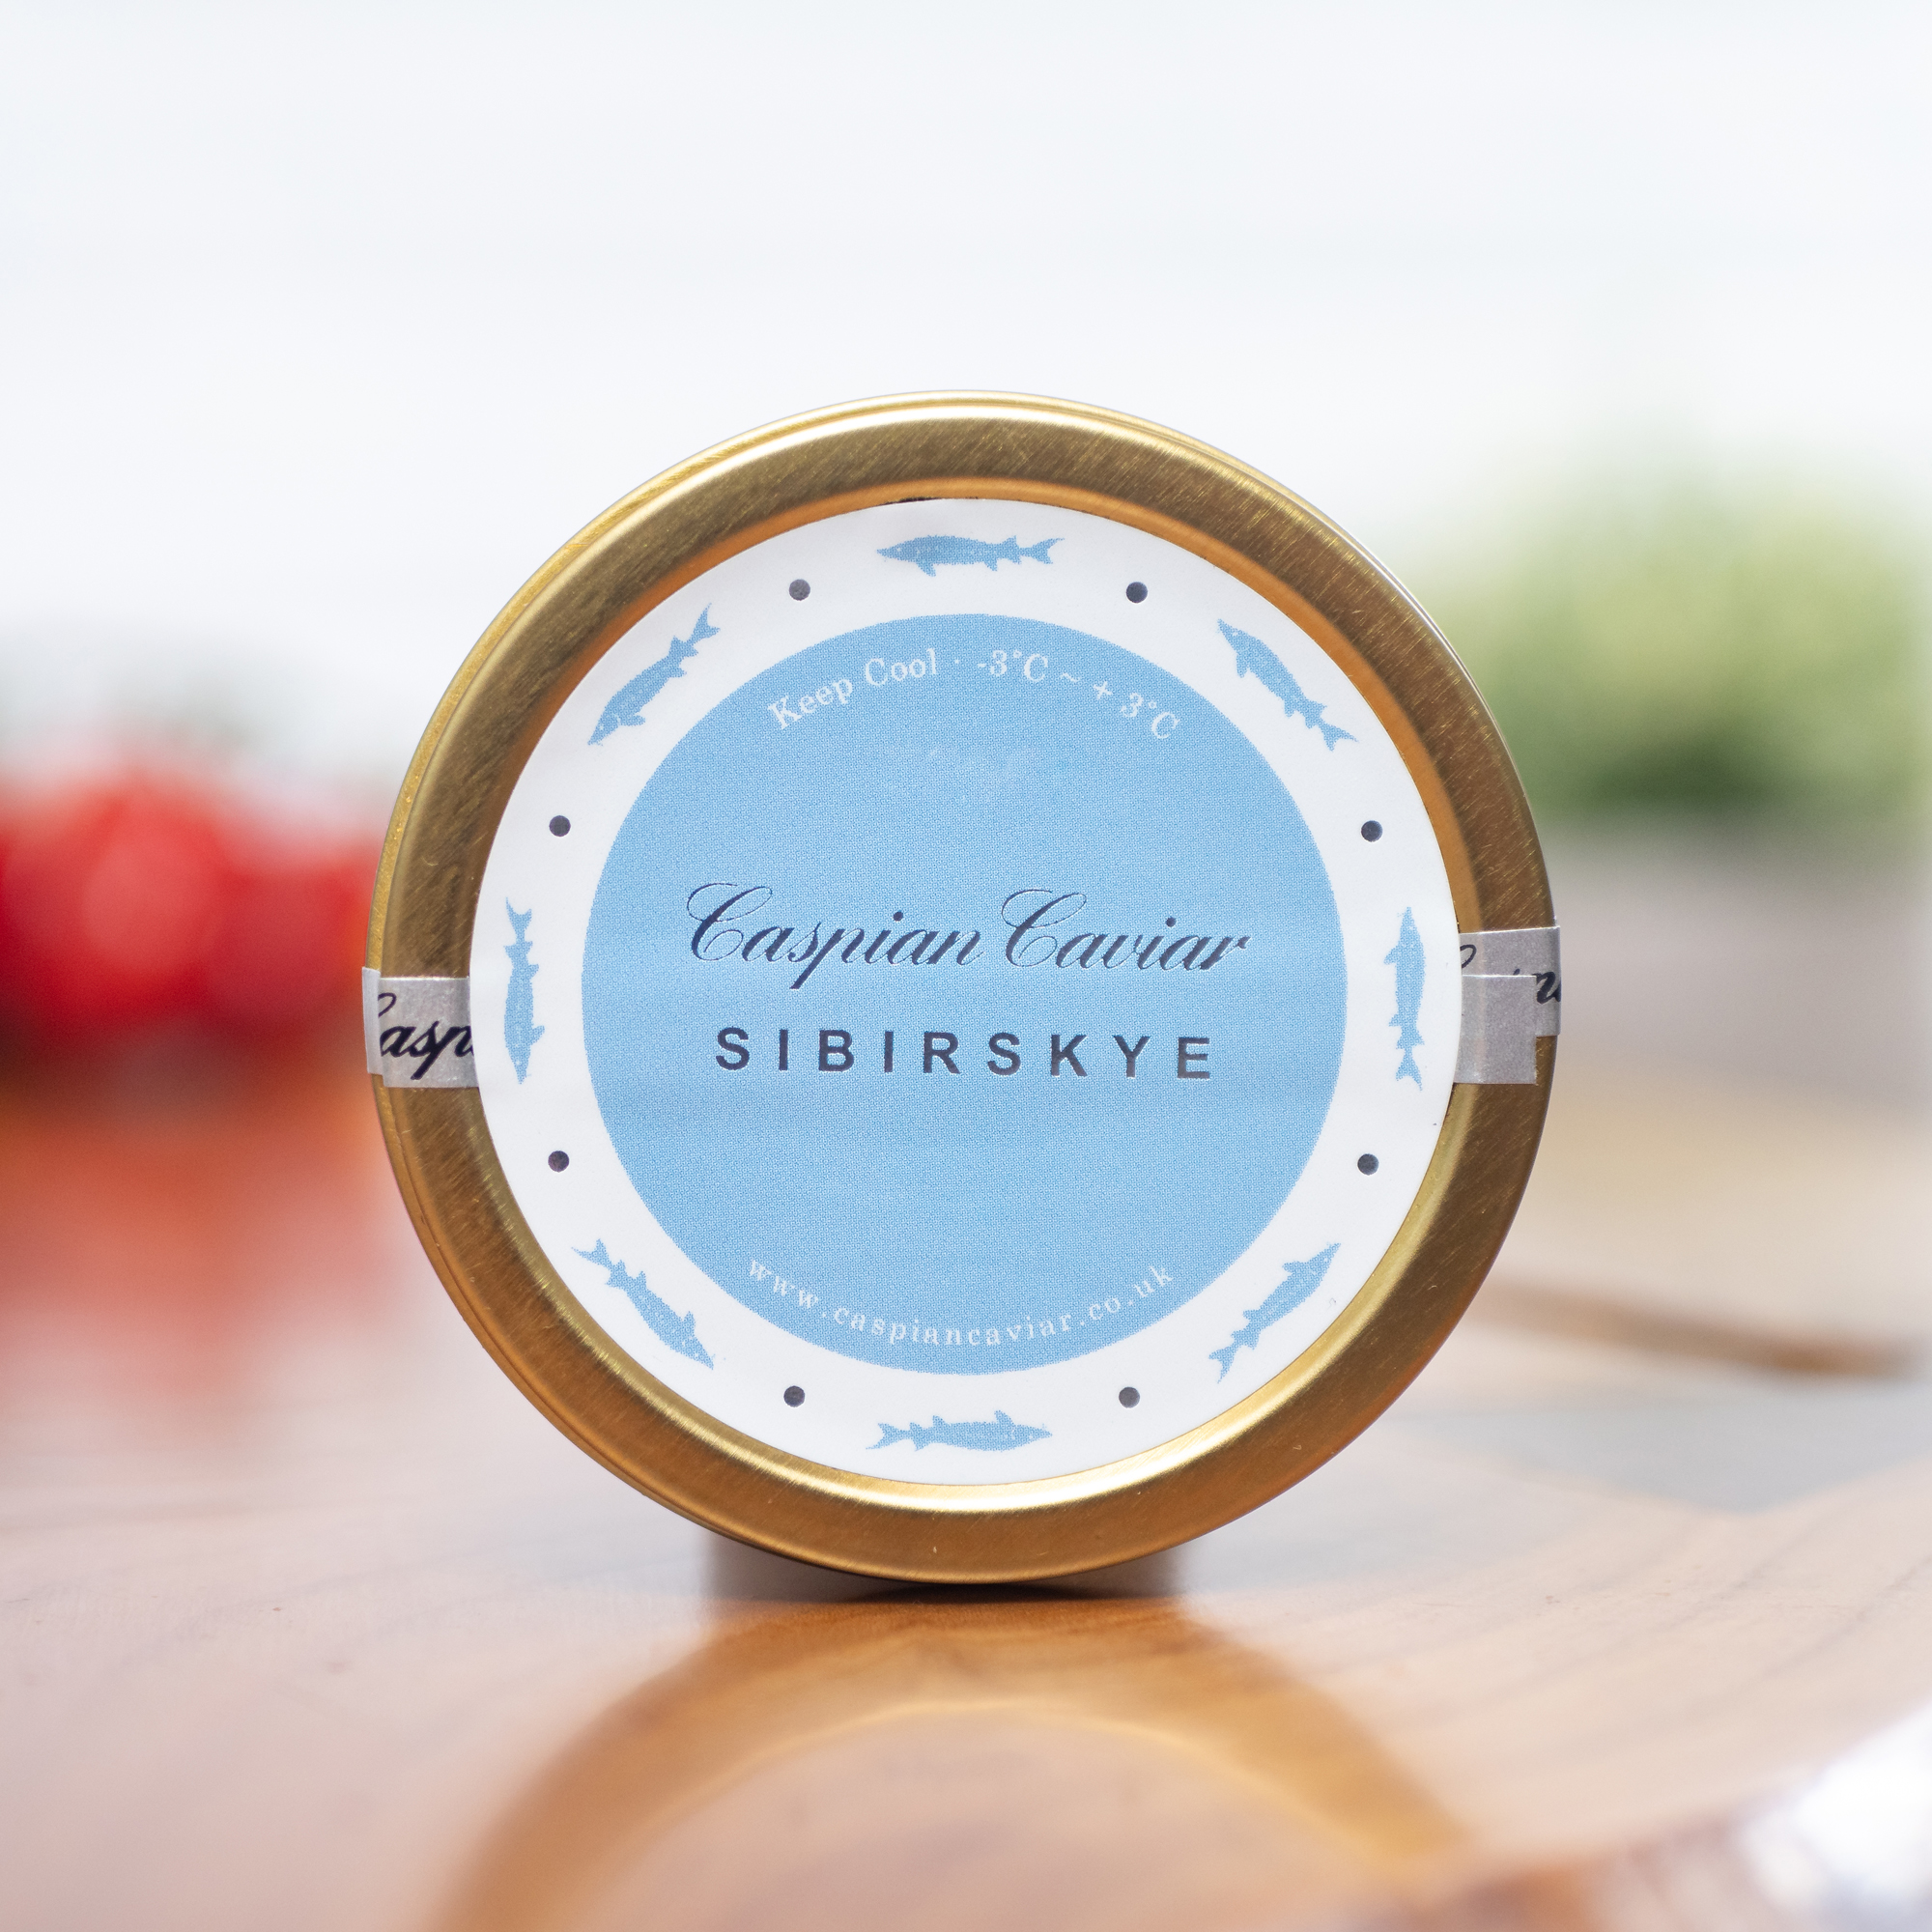 Caspian Caviar Sibirskye Premium Baerii Caviar 30g (Best Before 14/02/2024)  - The Good Food Network